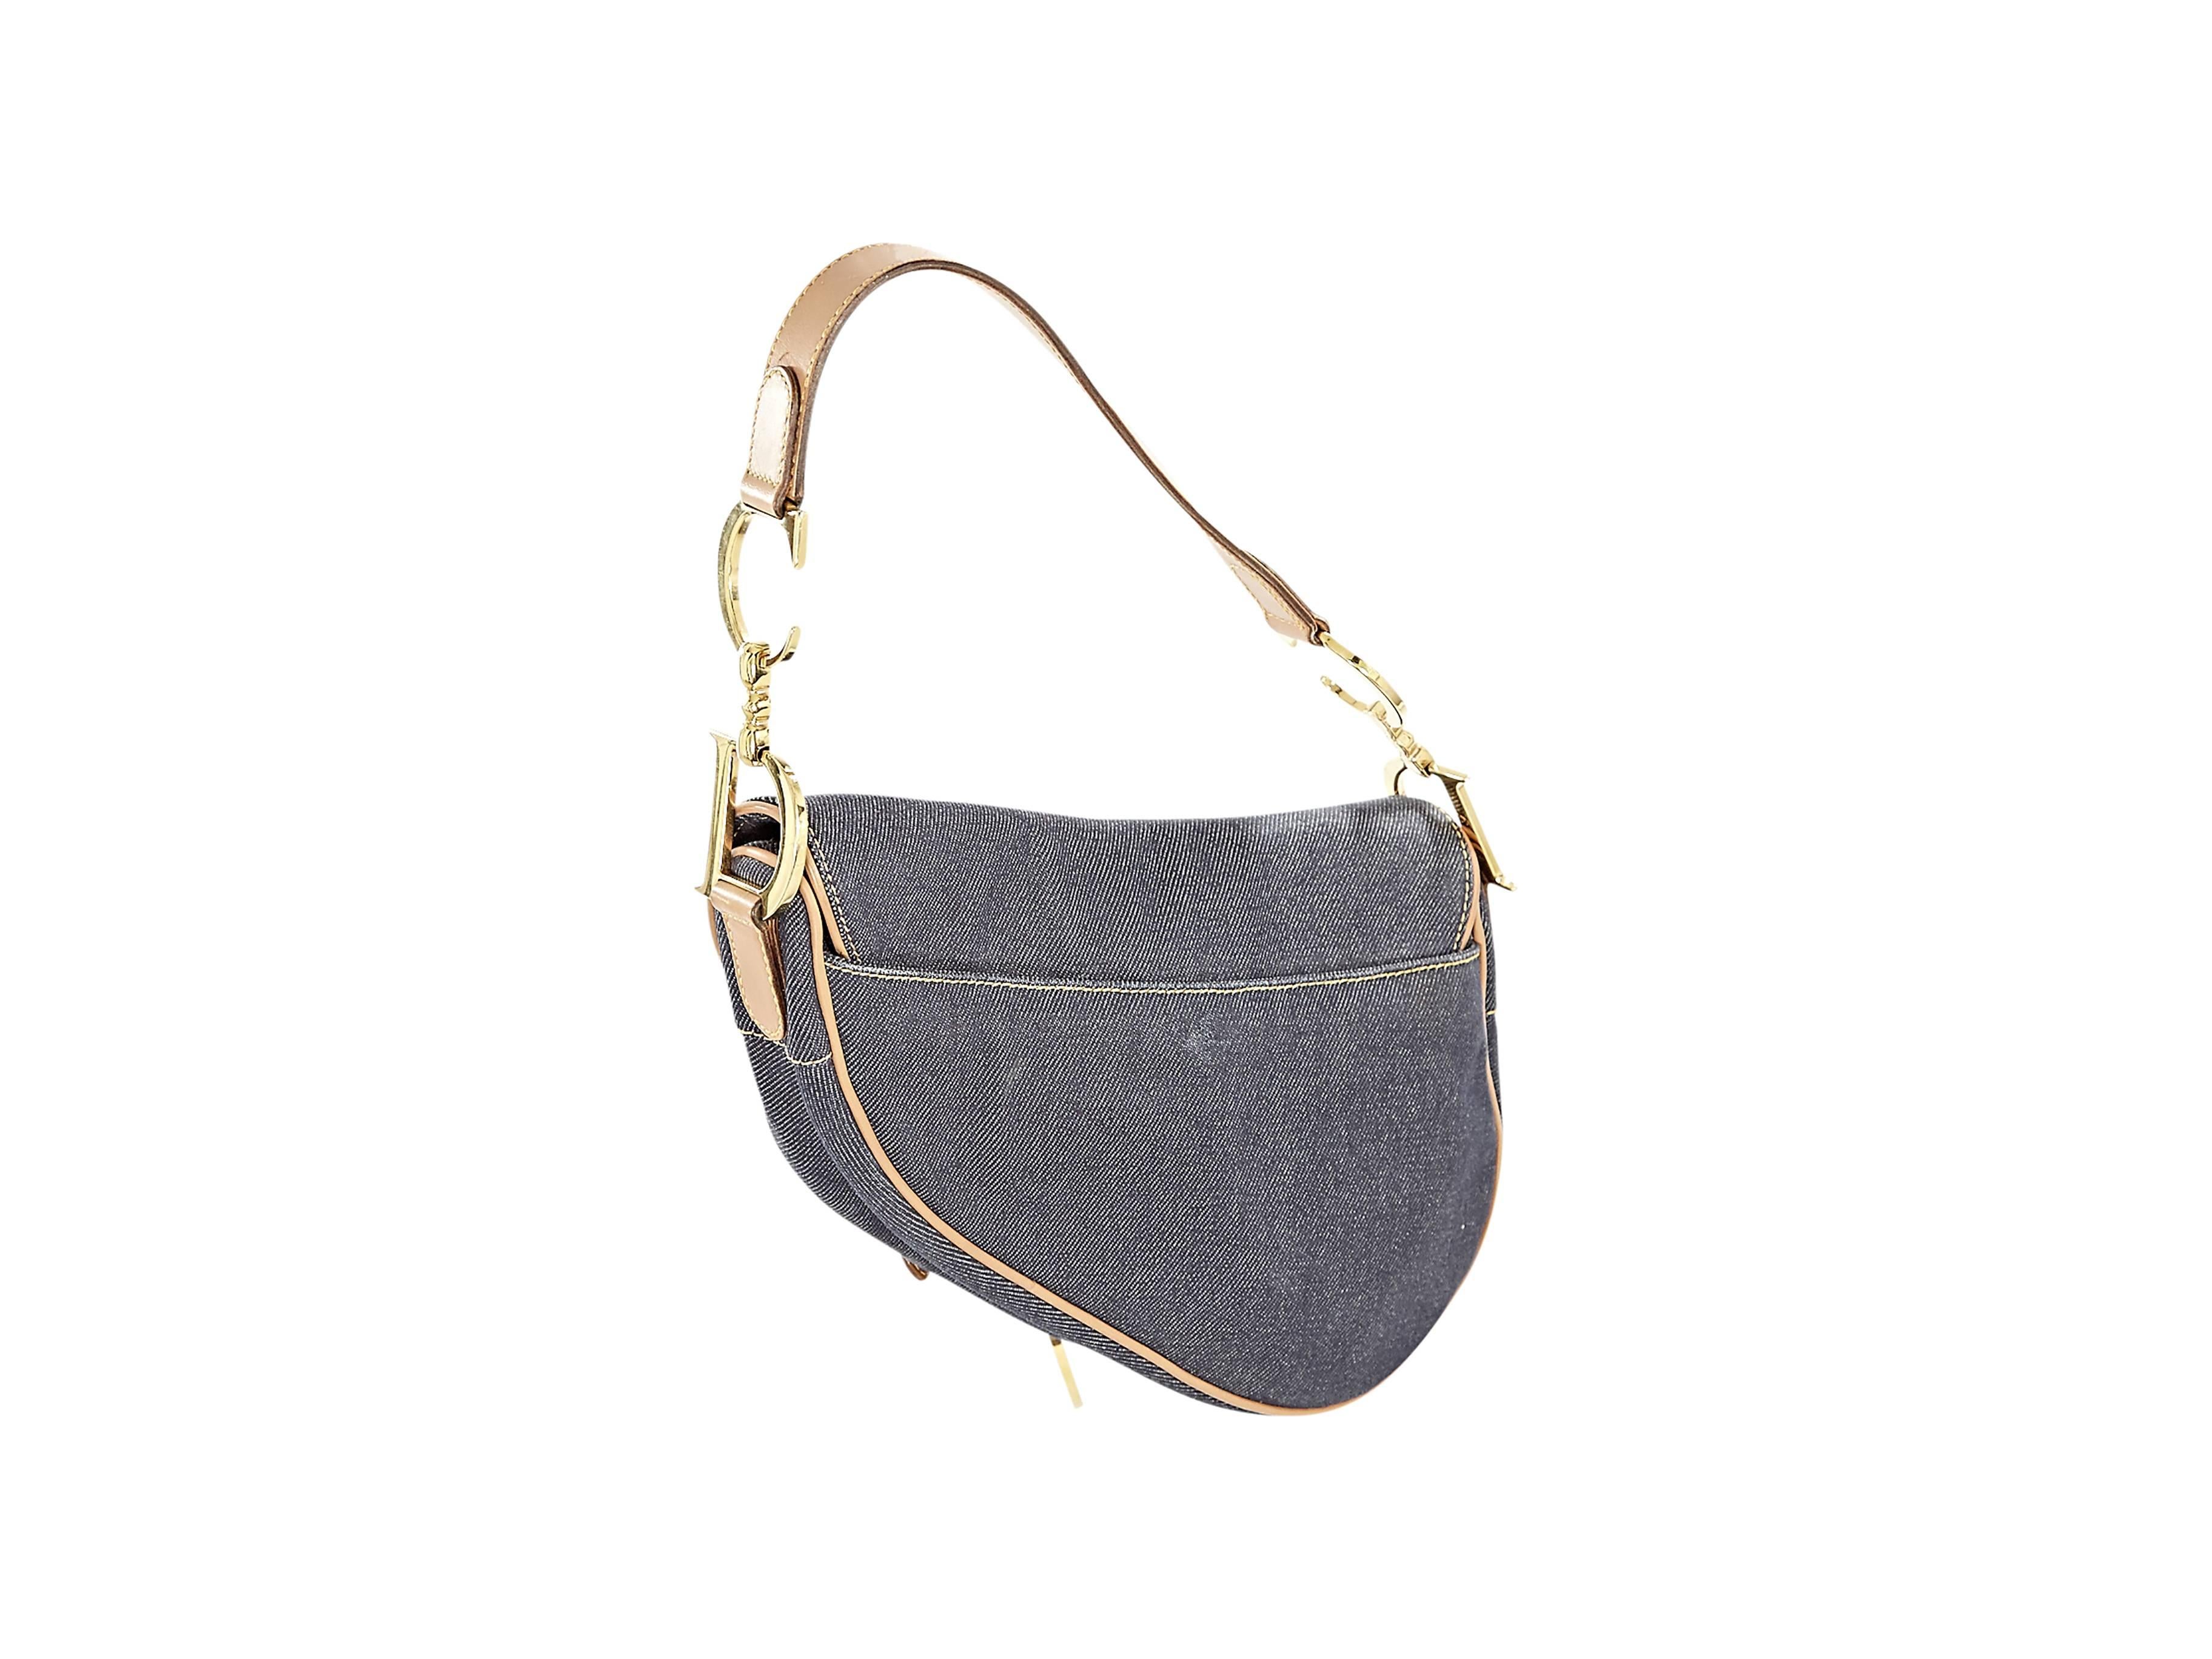 Blue denim saddle bag by Christian Dior.  Features tan leather trim.  Single shoulder strap.  Front flap with hanging 'D' charm.  Lined interior with inner zip pocket.  Goldtone hardware. Shoulder Strap Drop 7”, Height 6”, Width 9”, Depth 1”